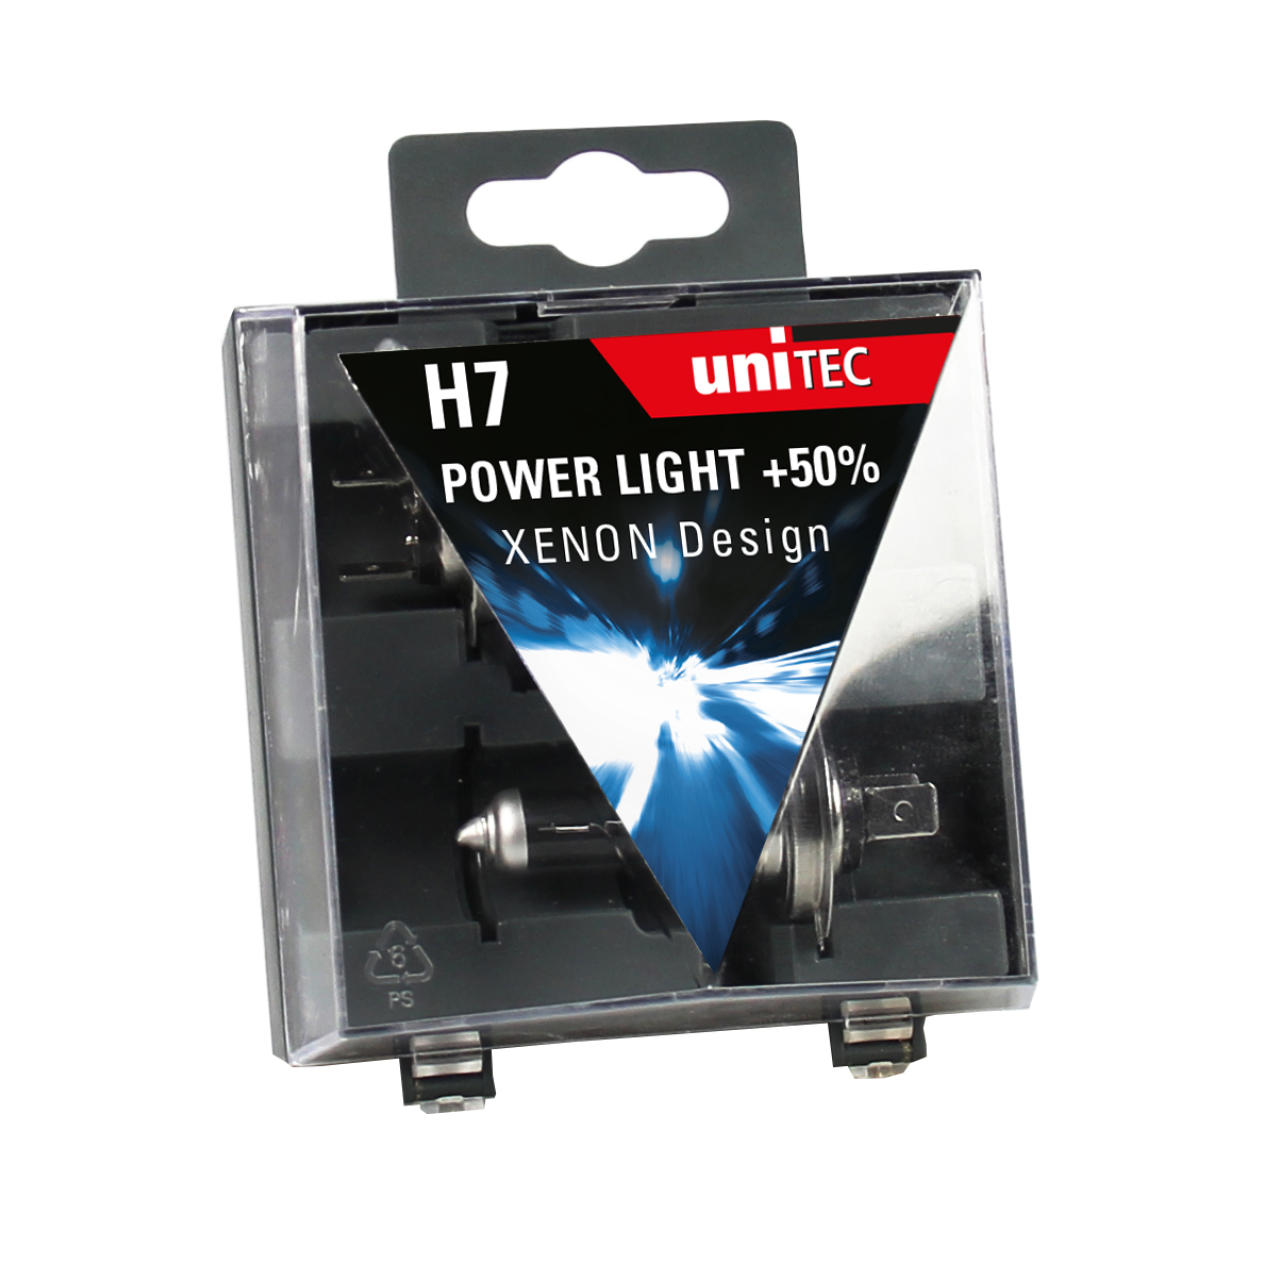  H7 AUTOLAMPE POWER LIGHT +50% 12V 55W 2X